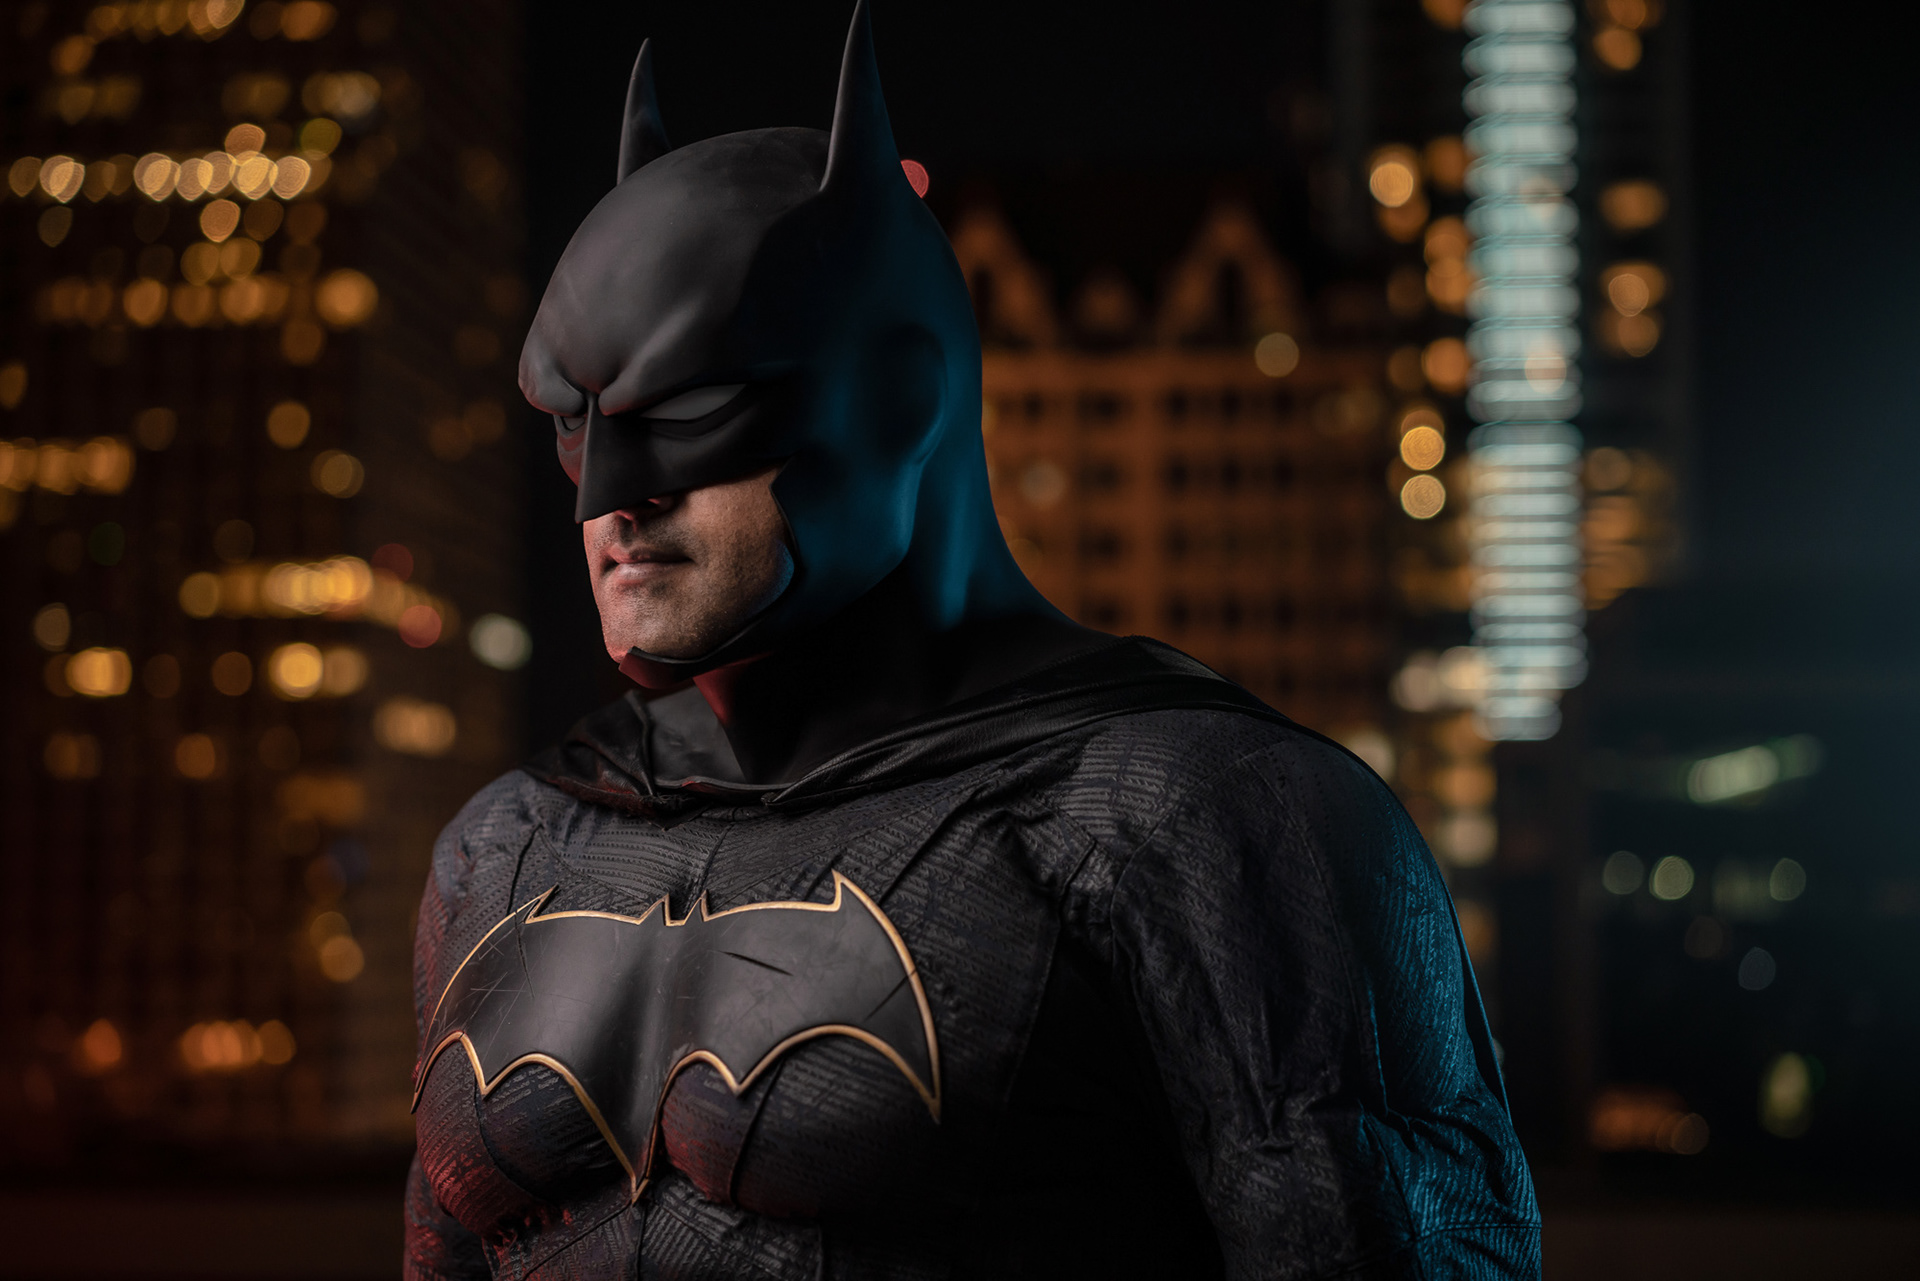 Ilya Nodia Creates a Cinematic Batman Cosplay Shoot With Video Lights